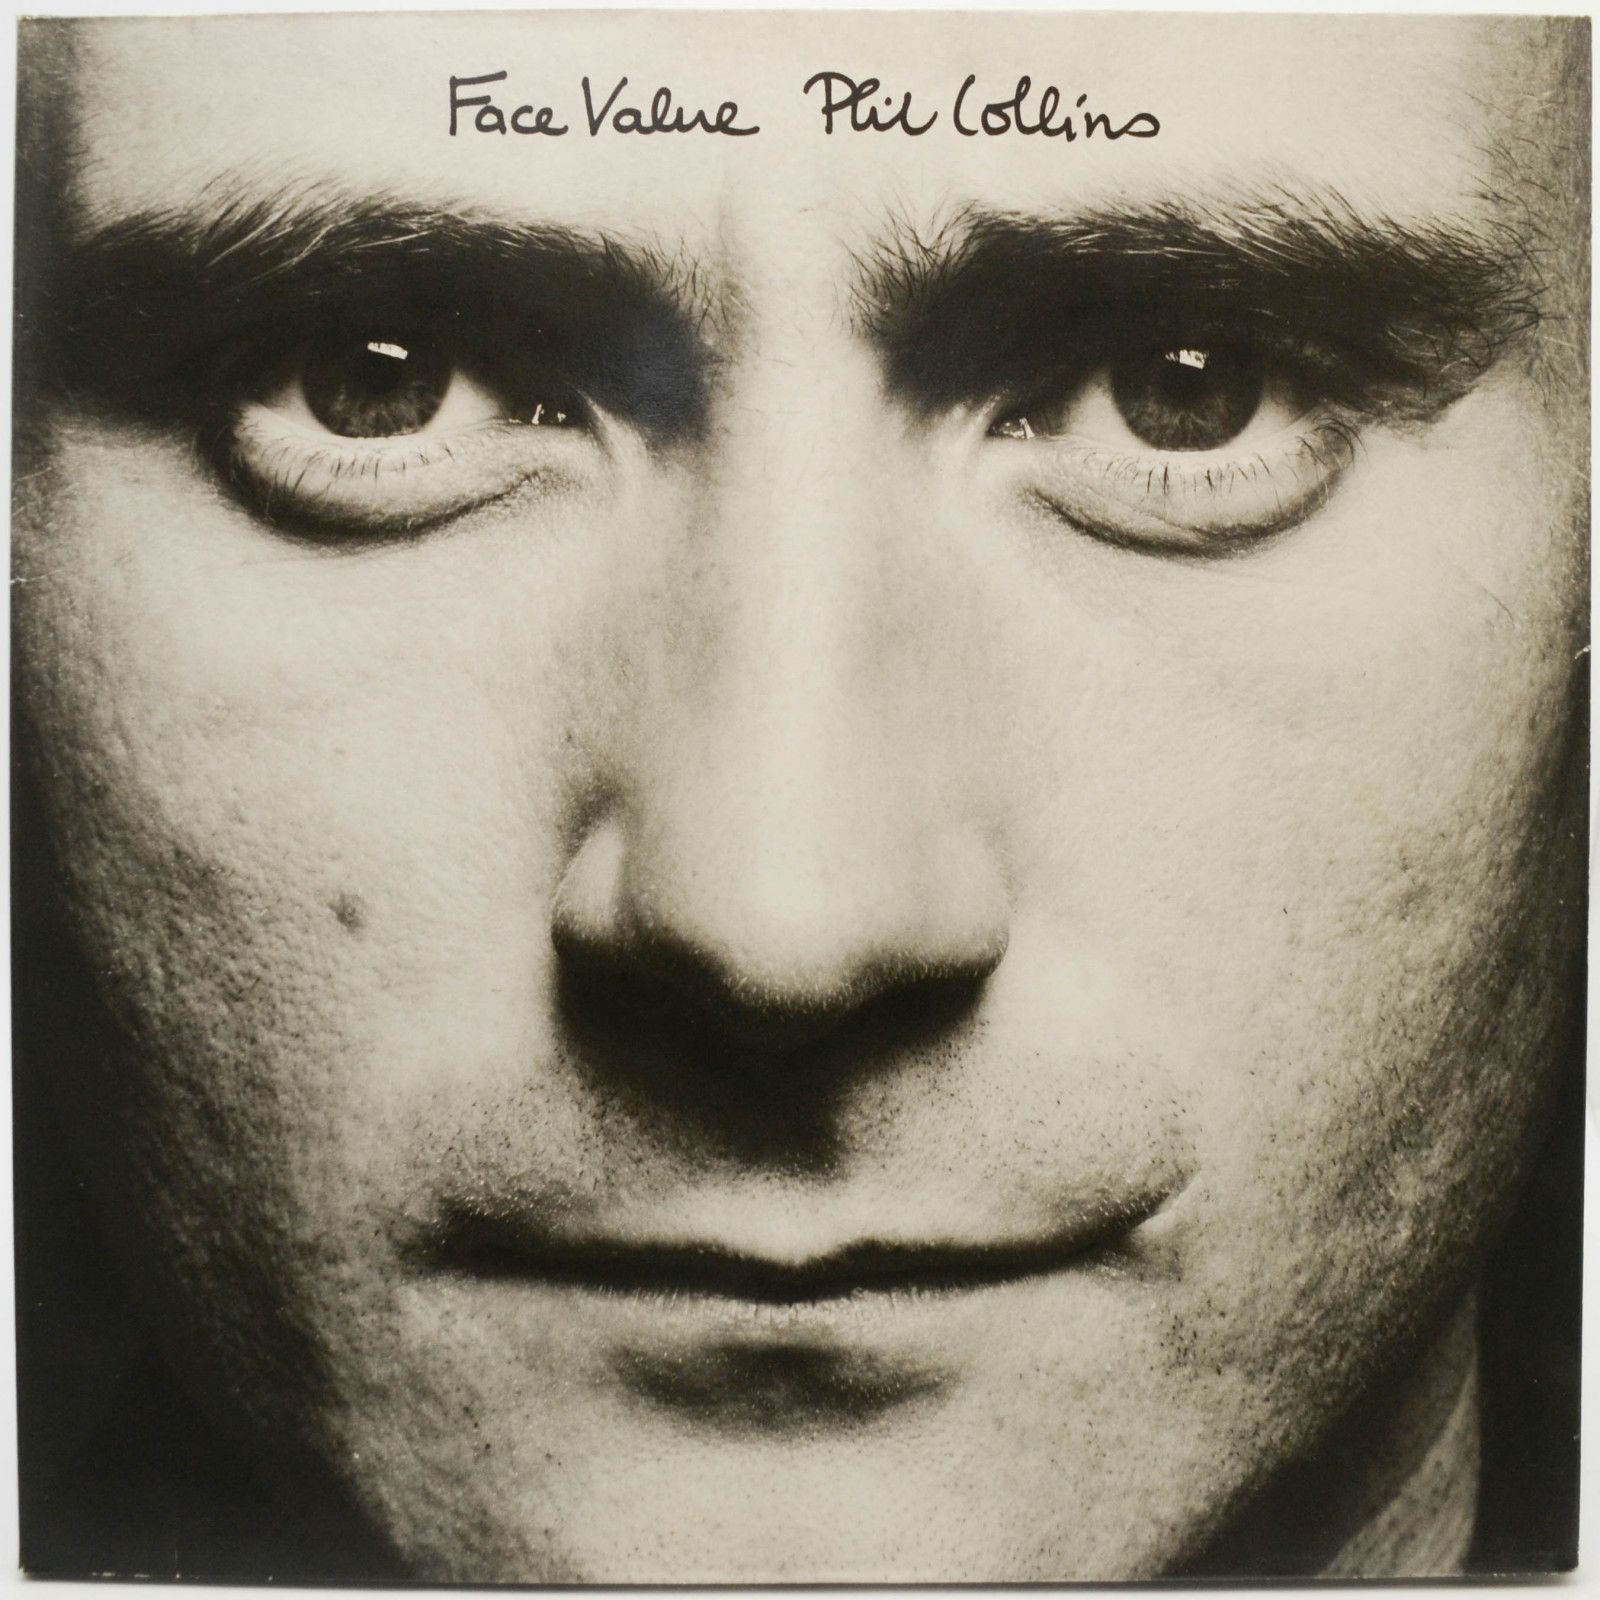 Phil Collins — Face Value, 1981